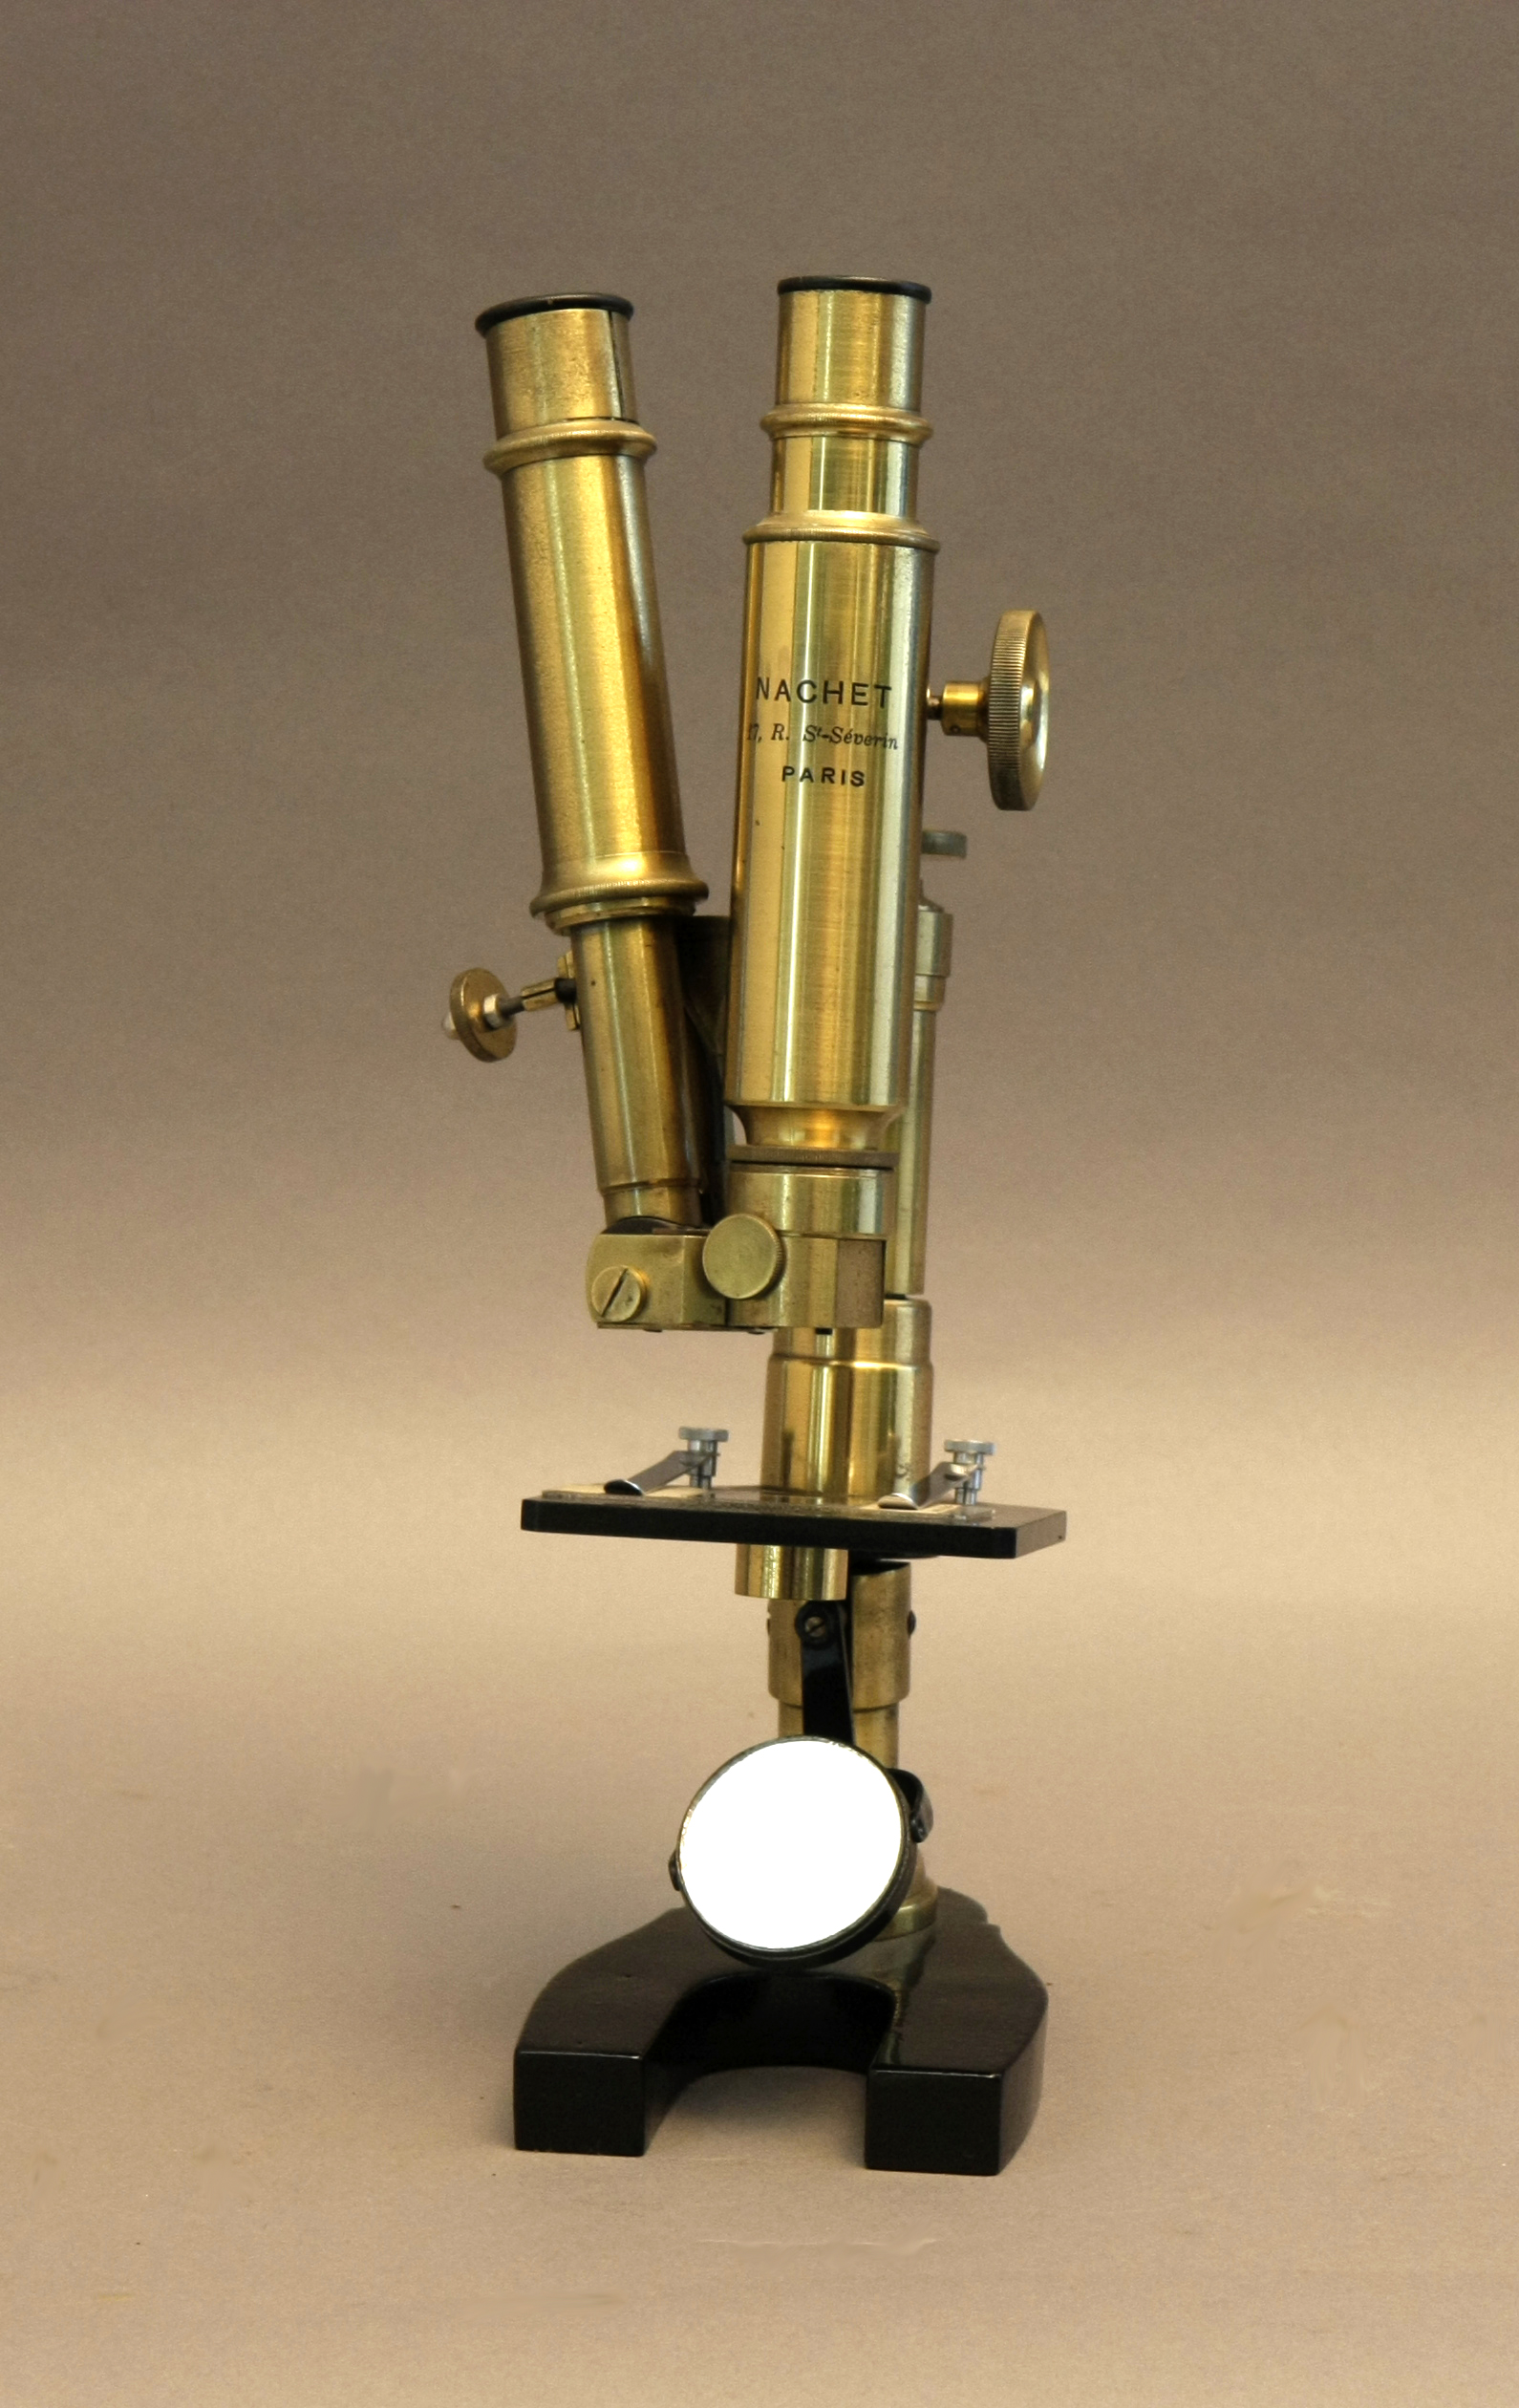 Microscopi binocular de la marca Nachet